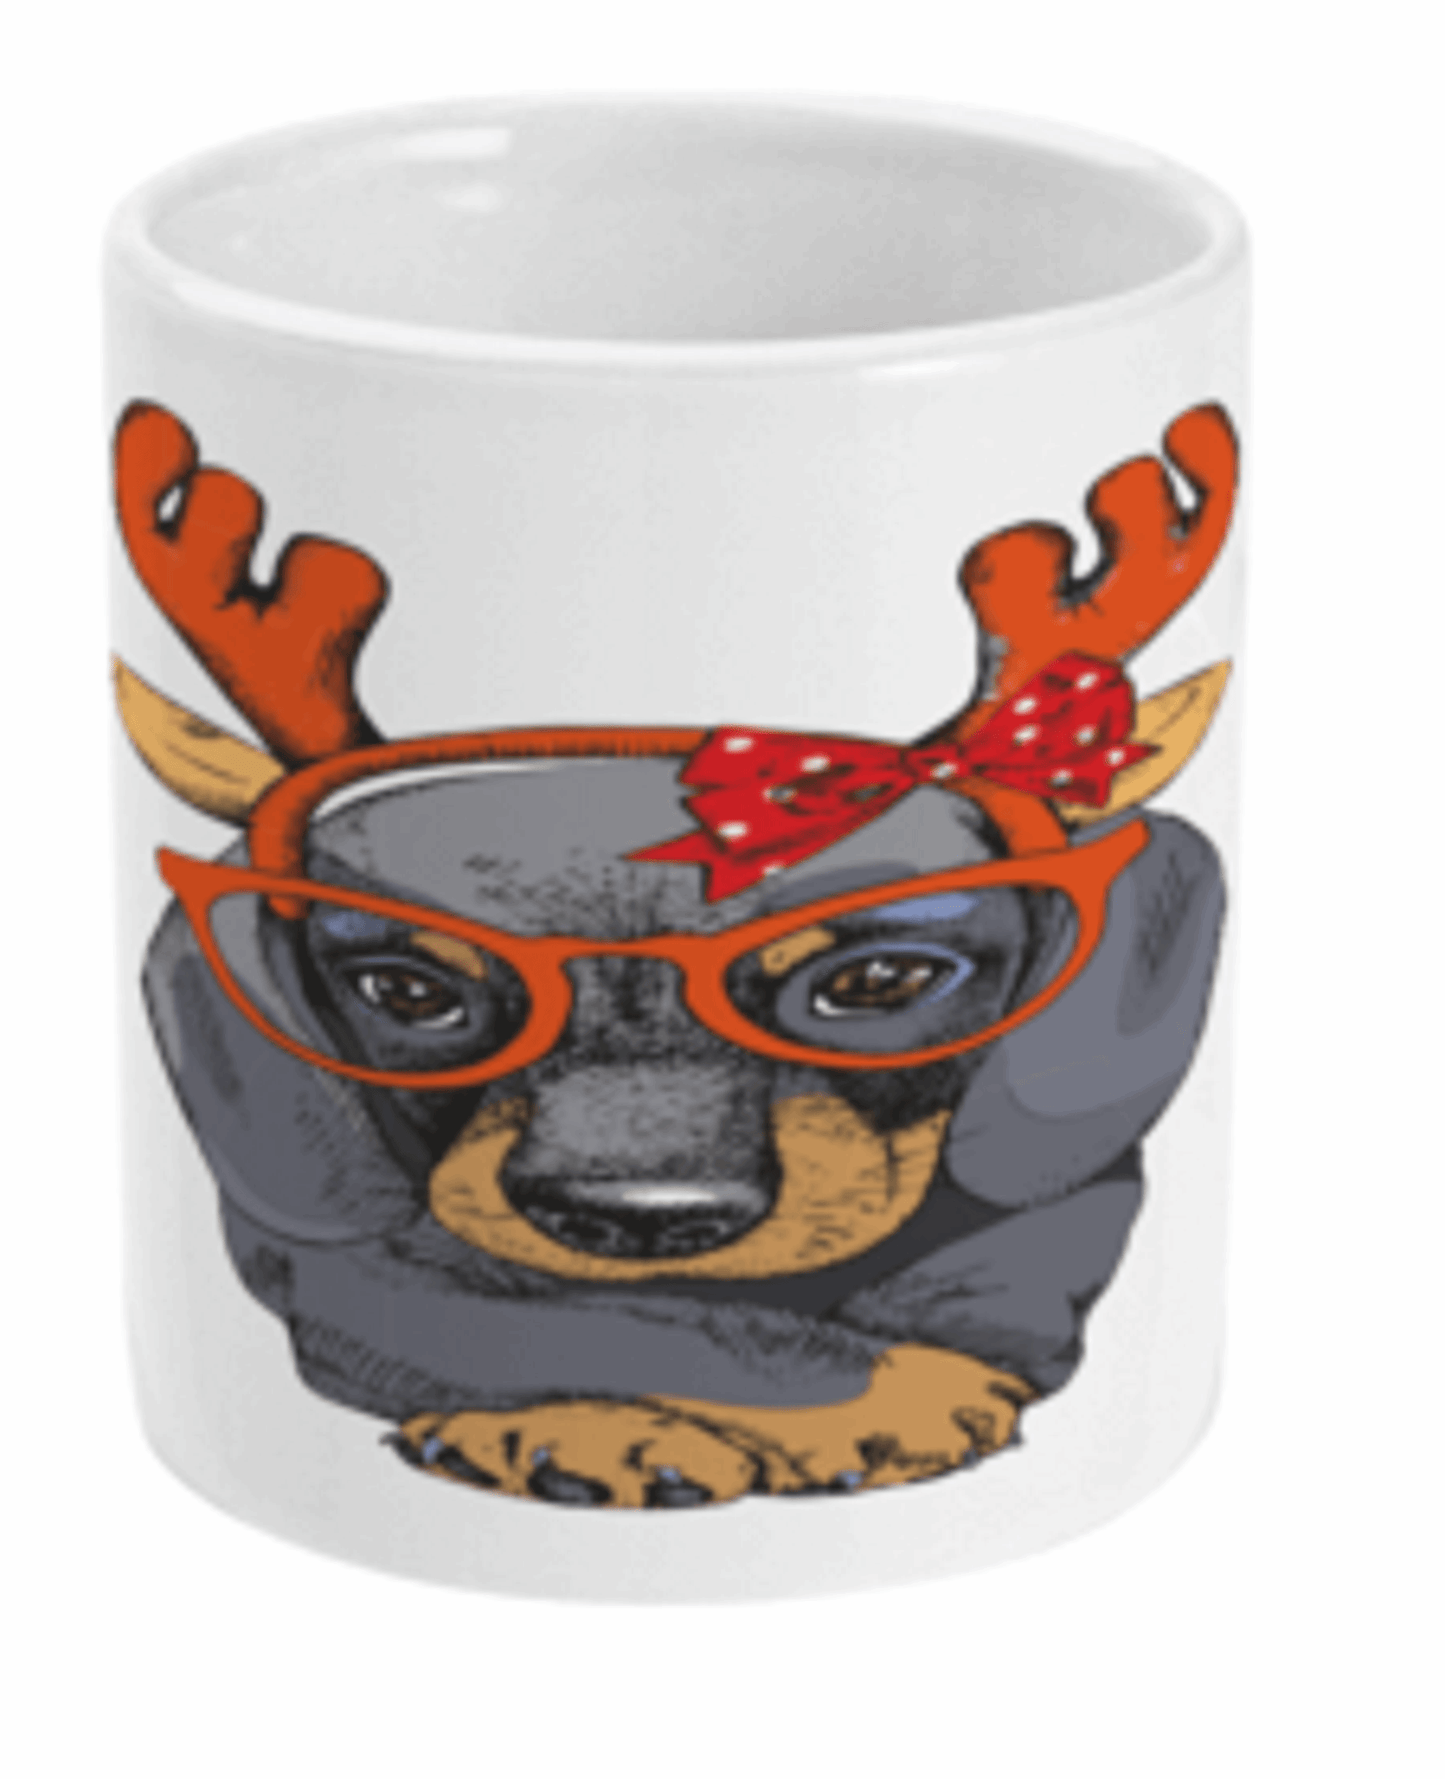  Christmas Dauschund Dog Coffee Mug by Free Spirit Accessories sold by Free Spirit Accessories